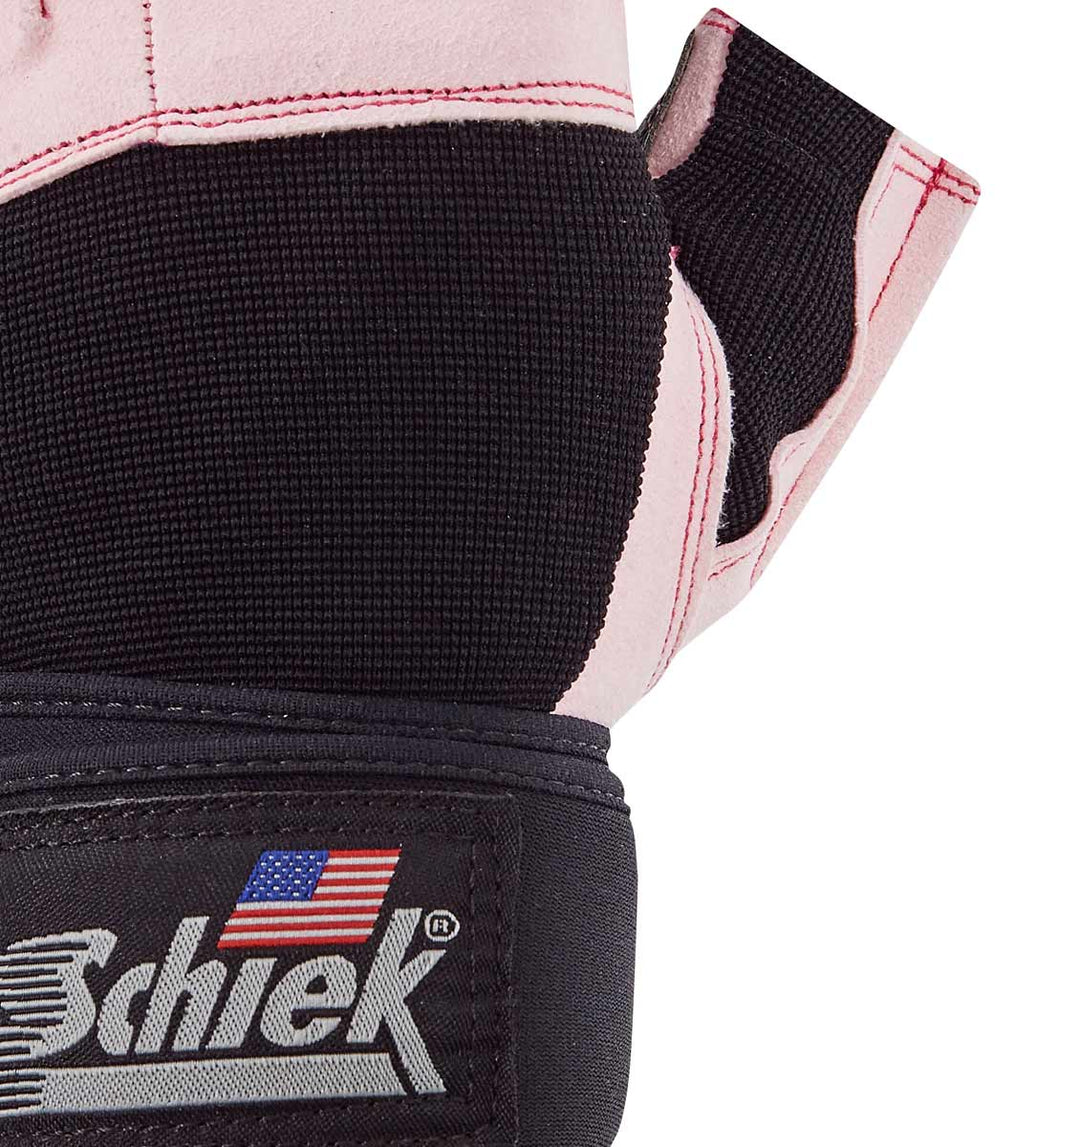 Model 540 Pink Platinum Series Lifting Gloves with Wrist Wraps Schiek Sports